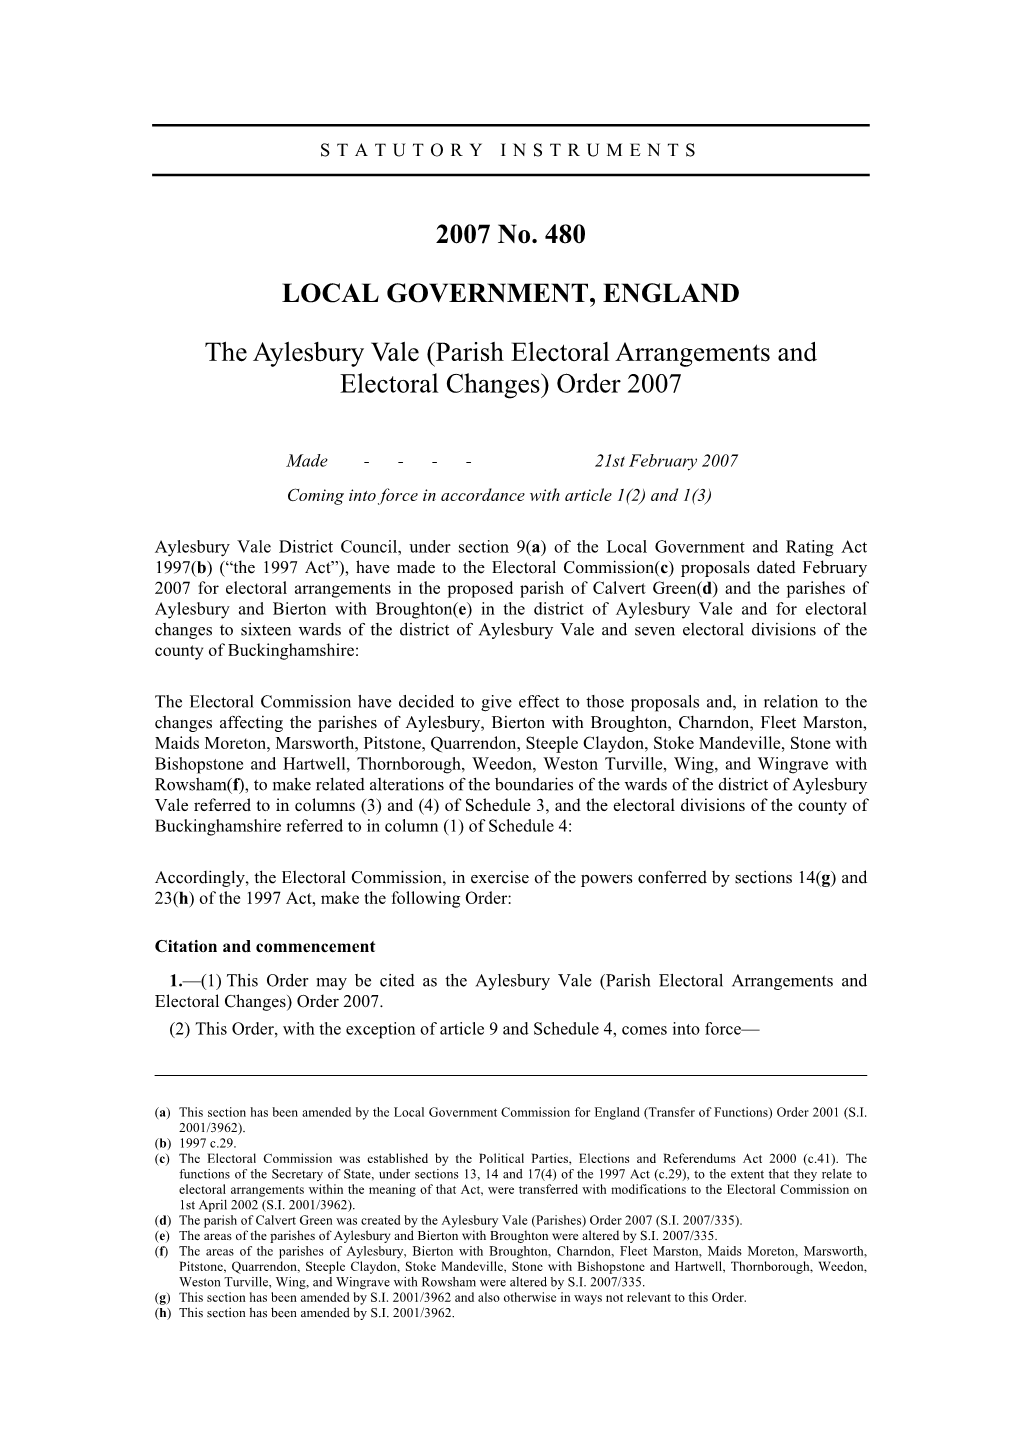 The Aylesbury Vale (Parish Electoral Arrangements and Electoral Changes) Order 2007